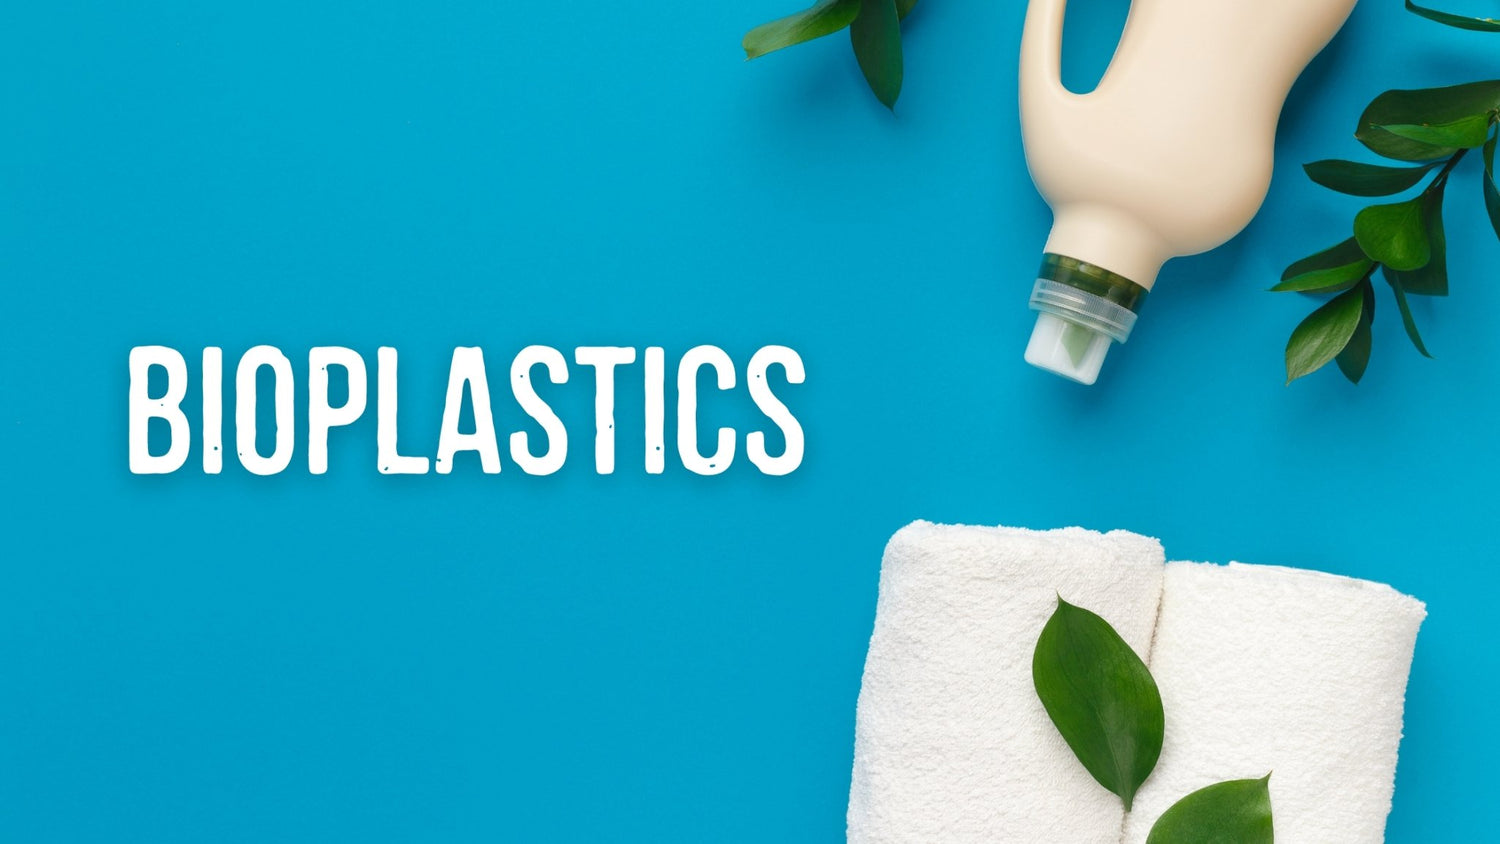 The truth about bioplastics - truthpaste